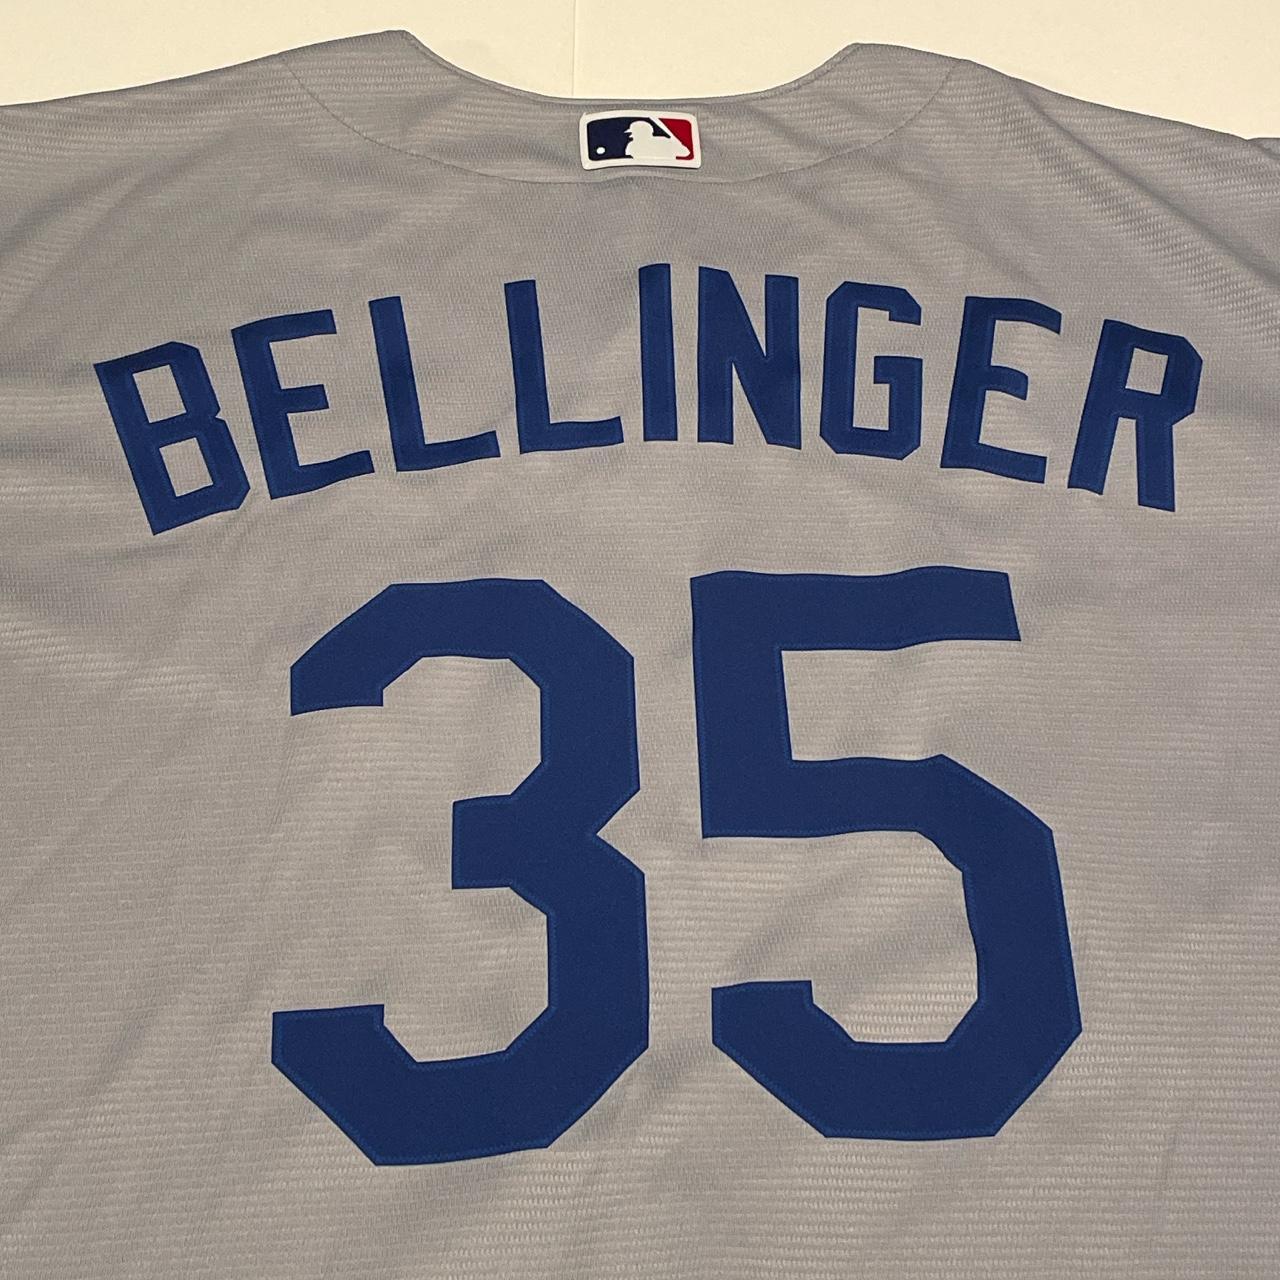 Nike Cody Bellinger LA Dodgers Home Jersey Men's - Depop